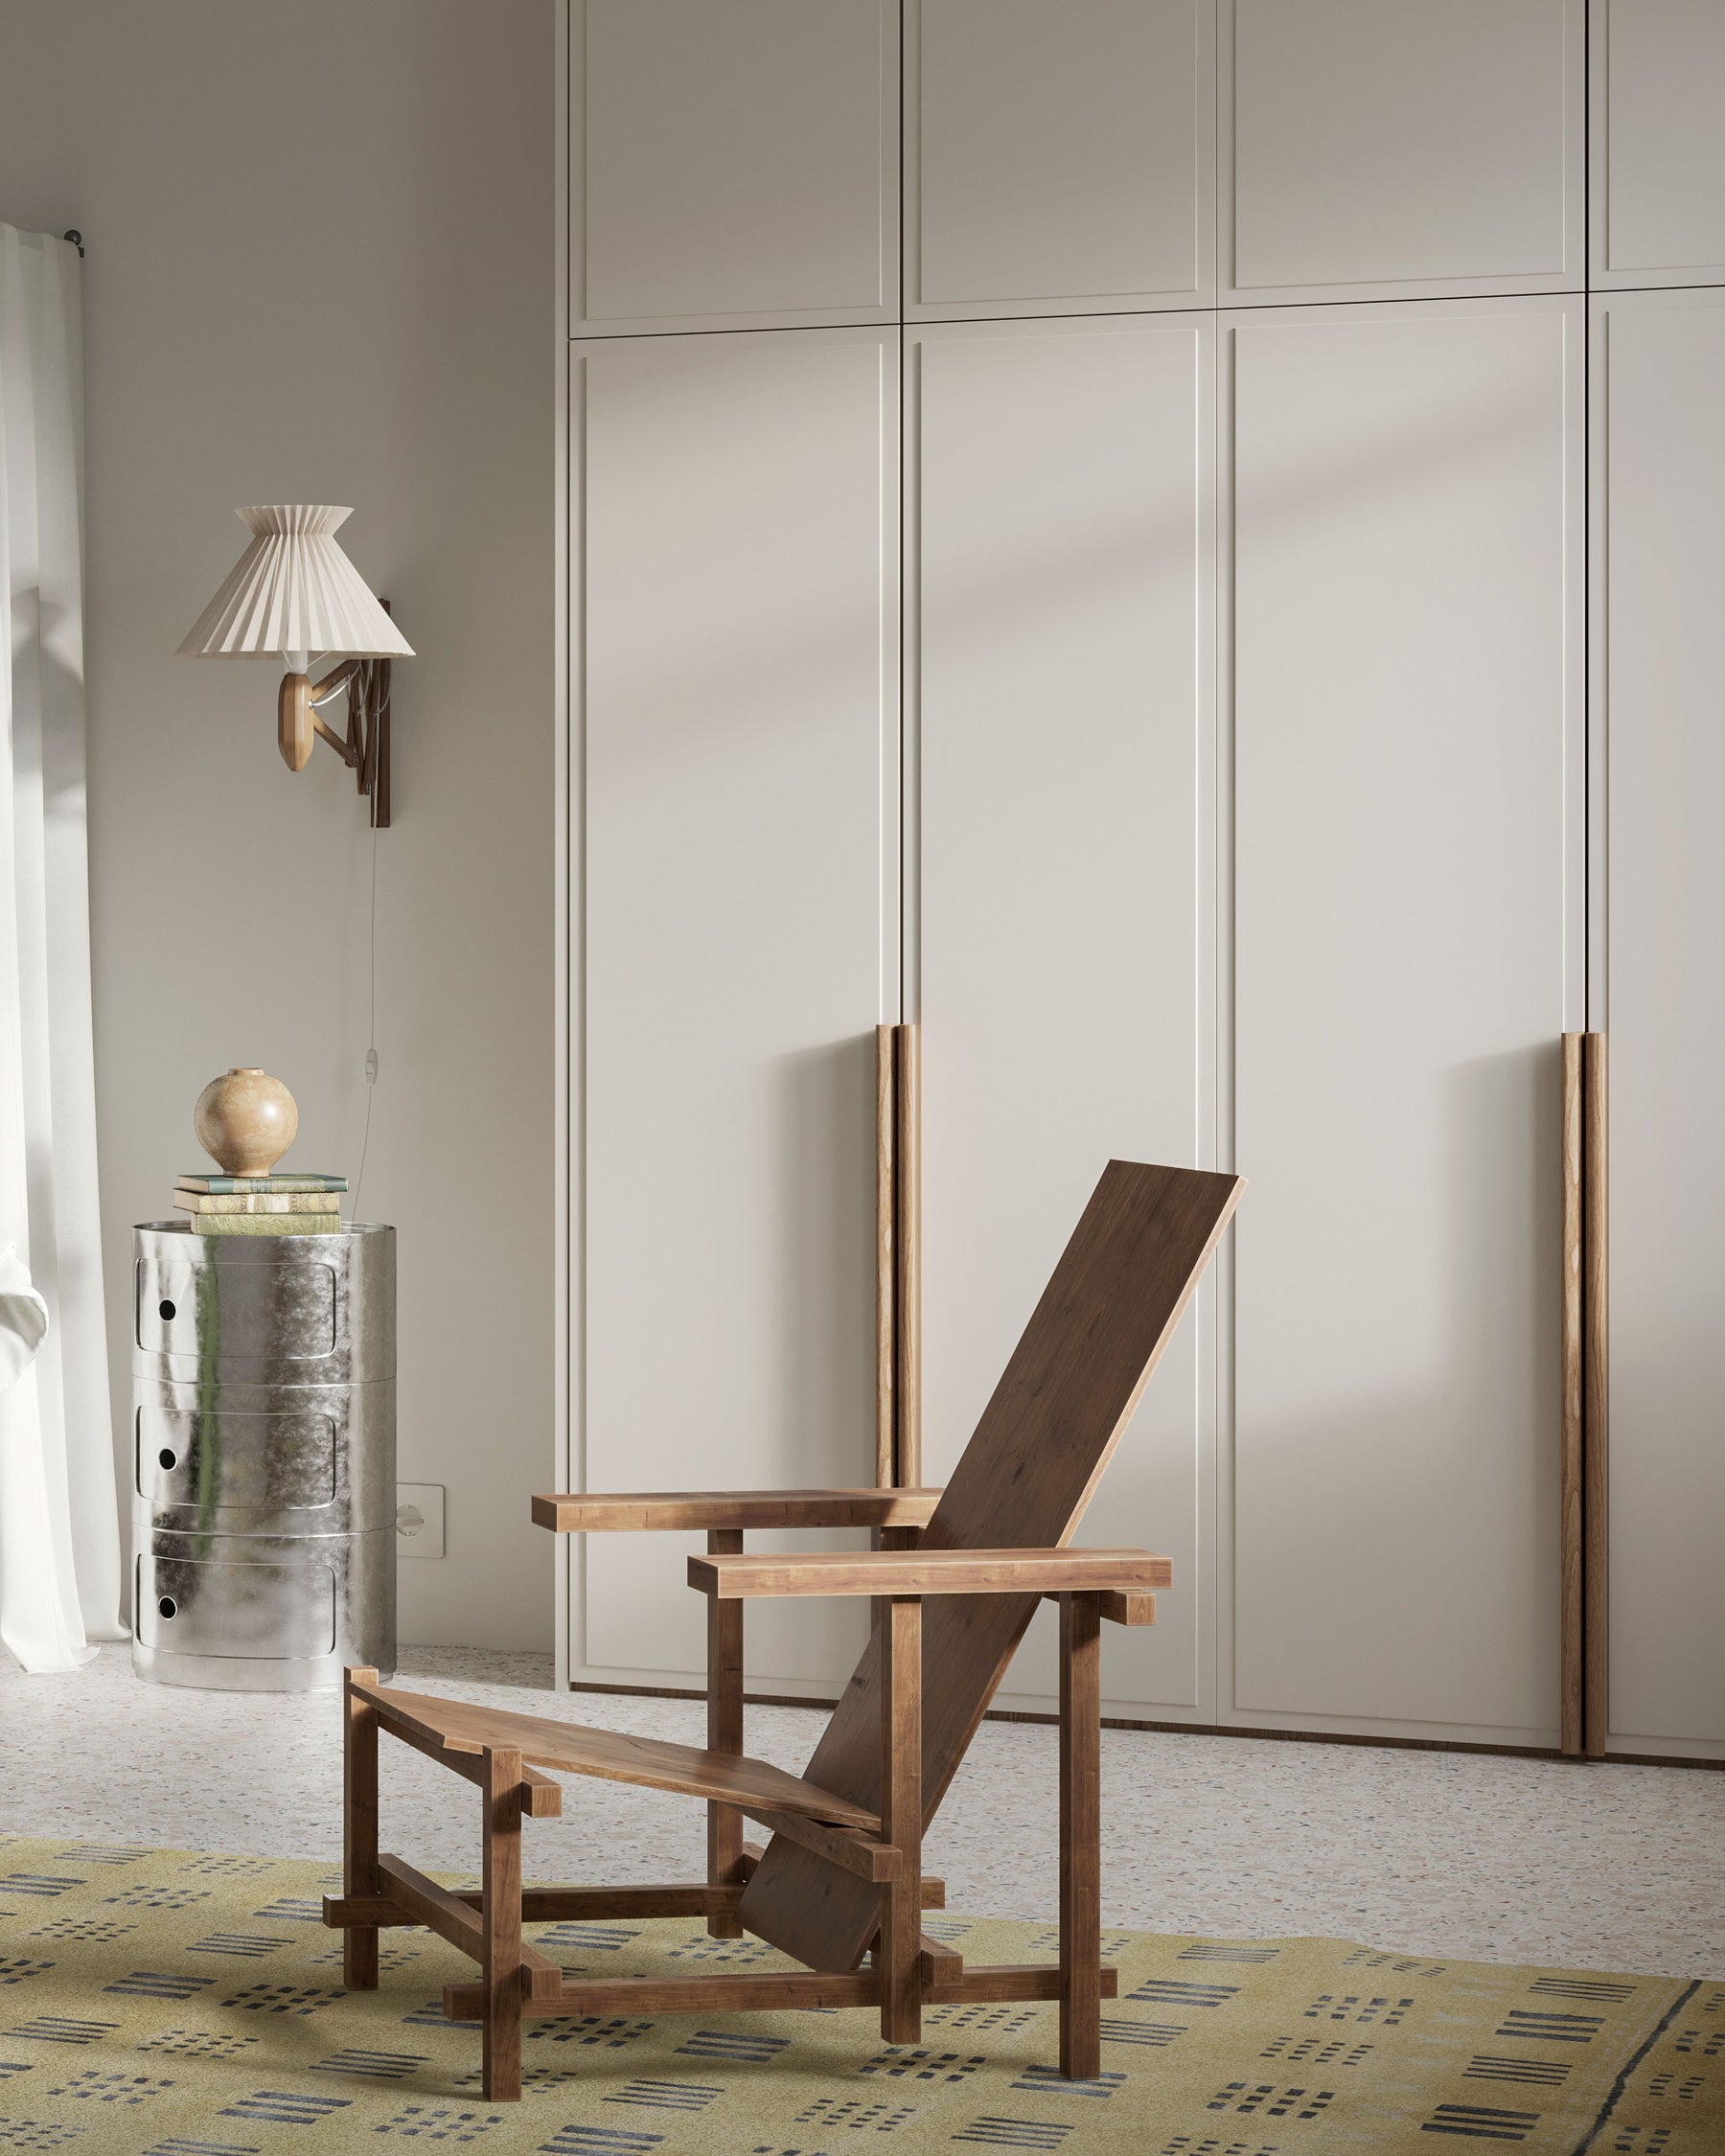 A.S.Helsingö Lalax wardrobe with IKEA PAX frames